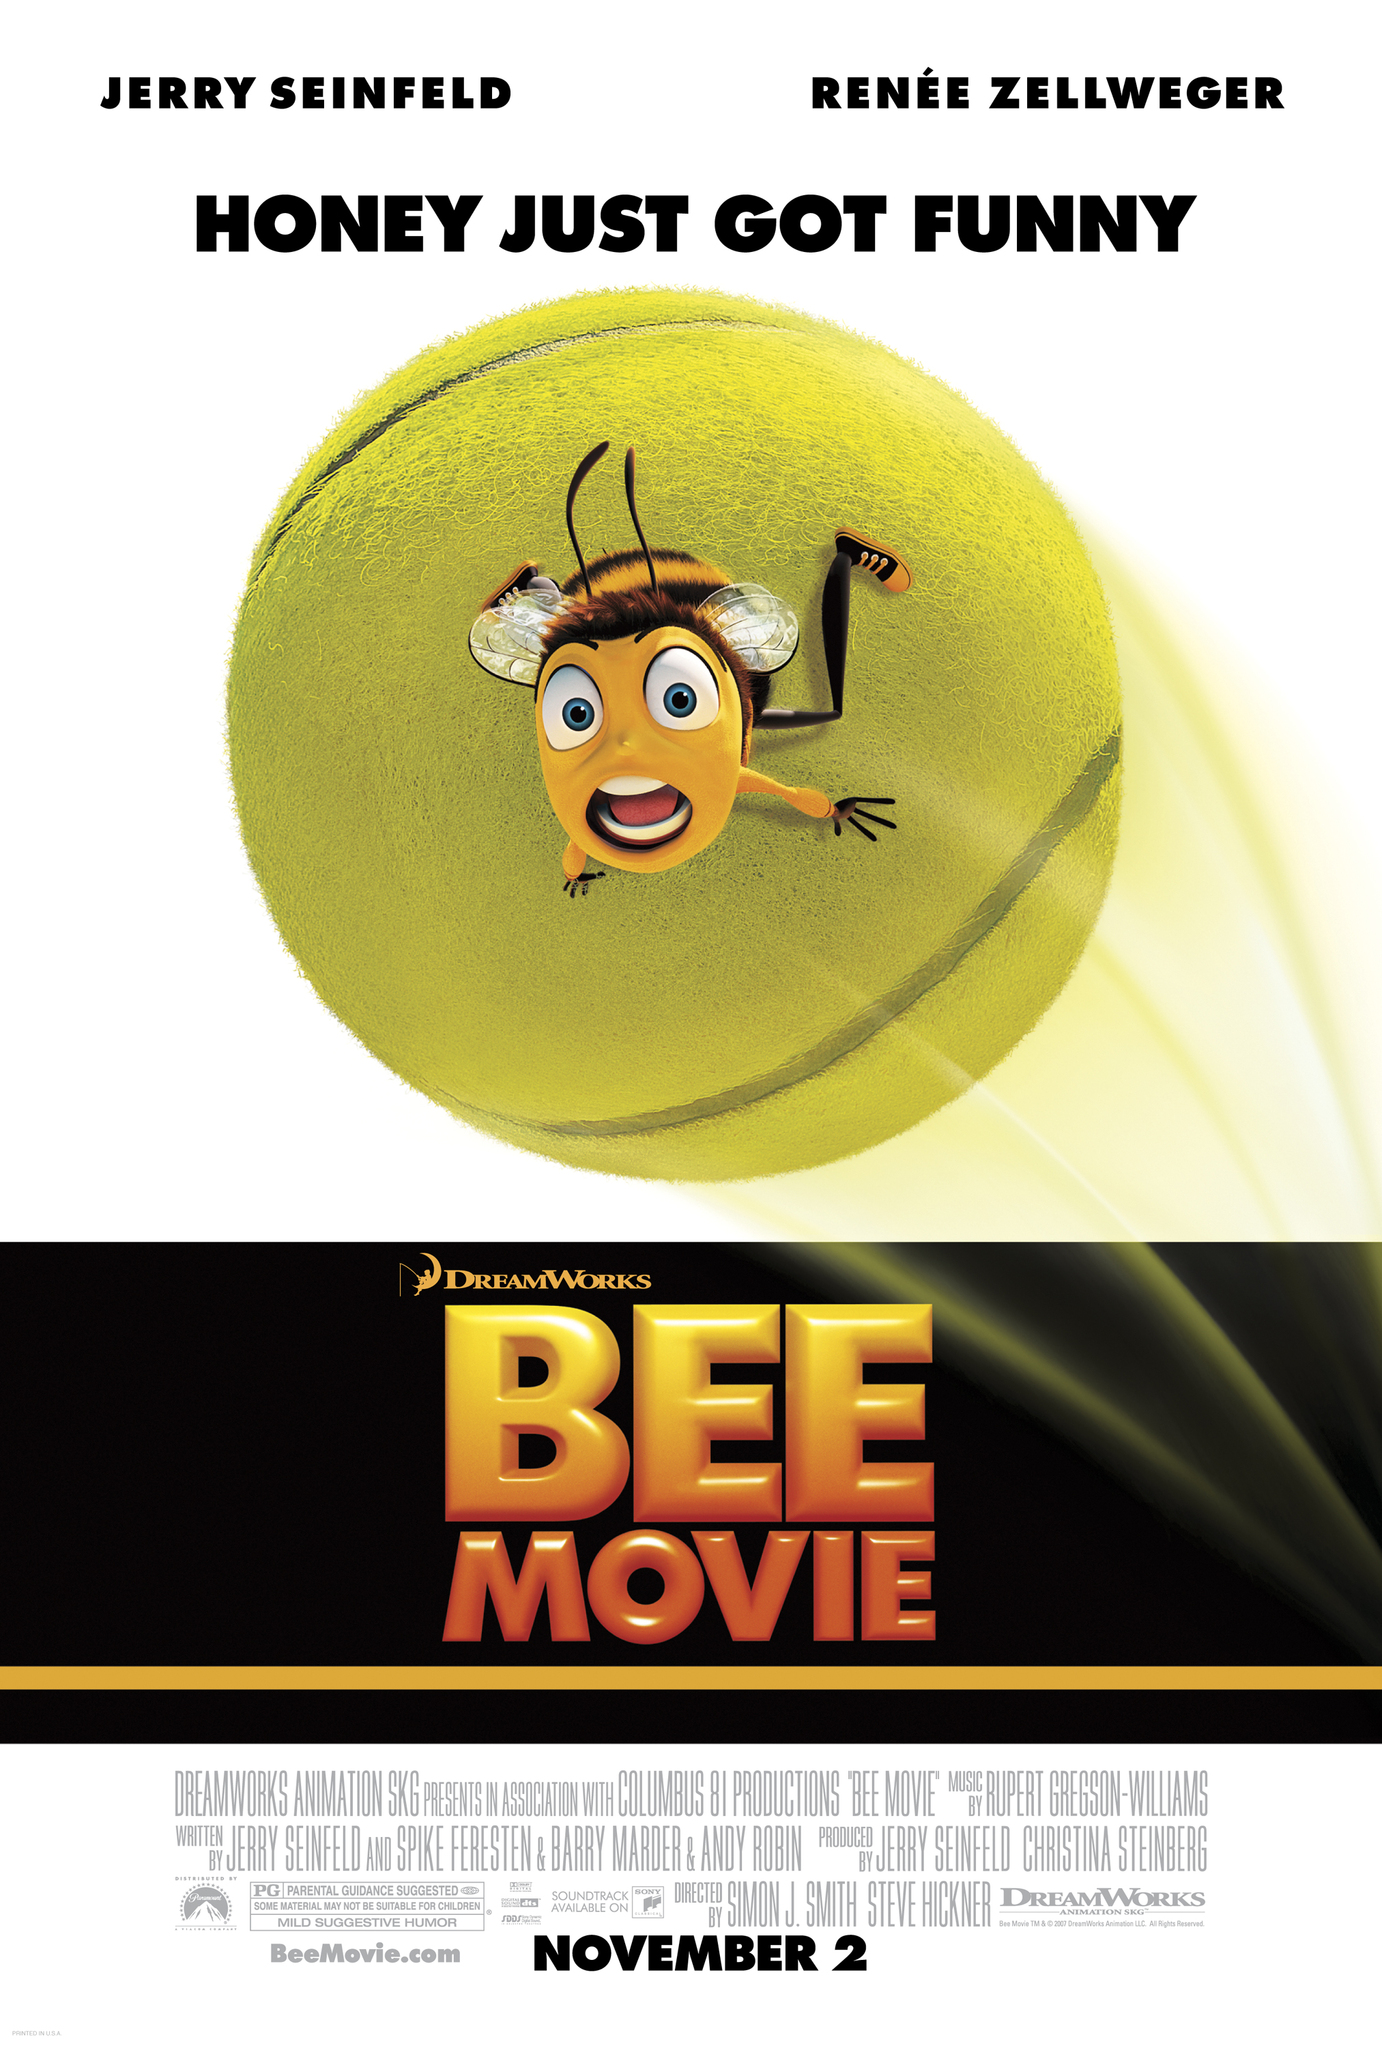 Bee Movie (2007) ผึ้งน้อยหัวใจบิ๊ก Jerry Seinfeld